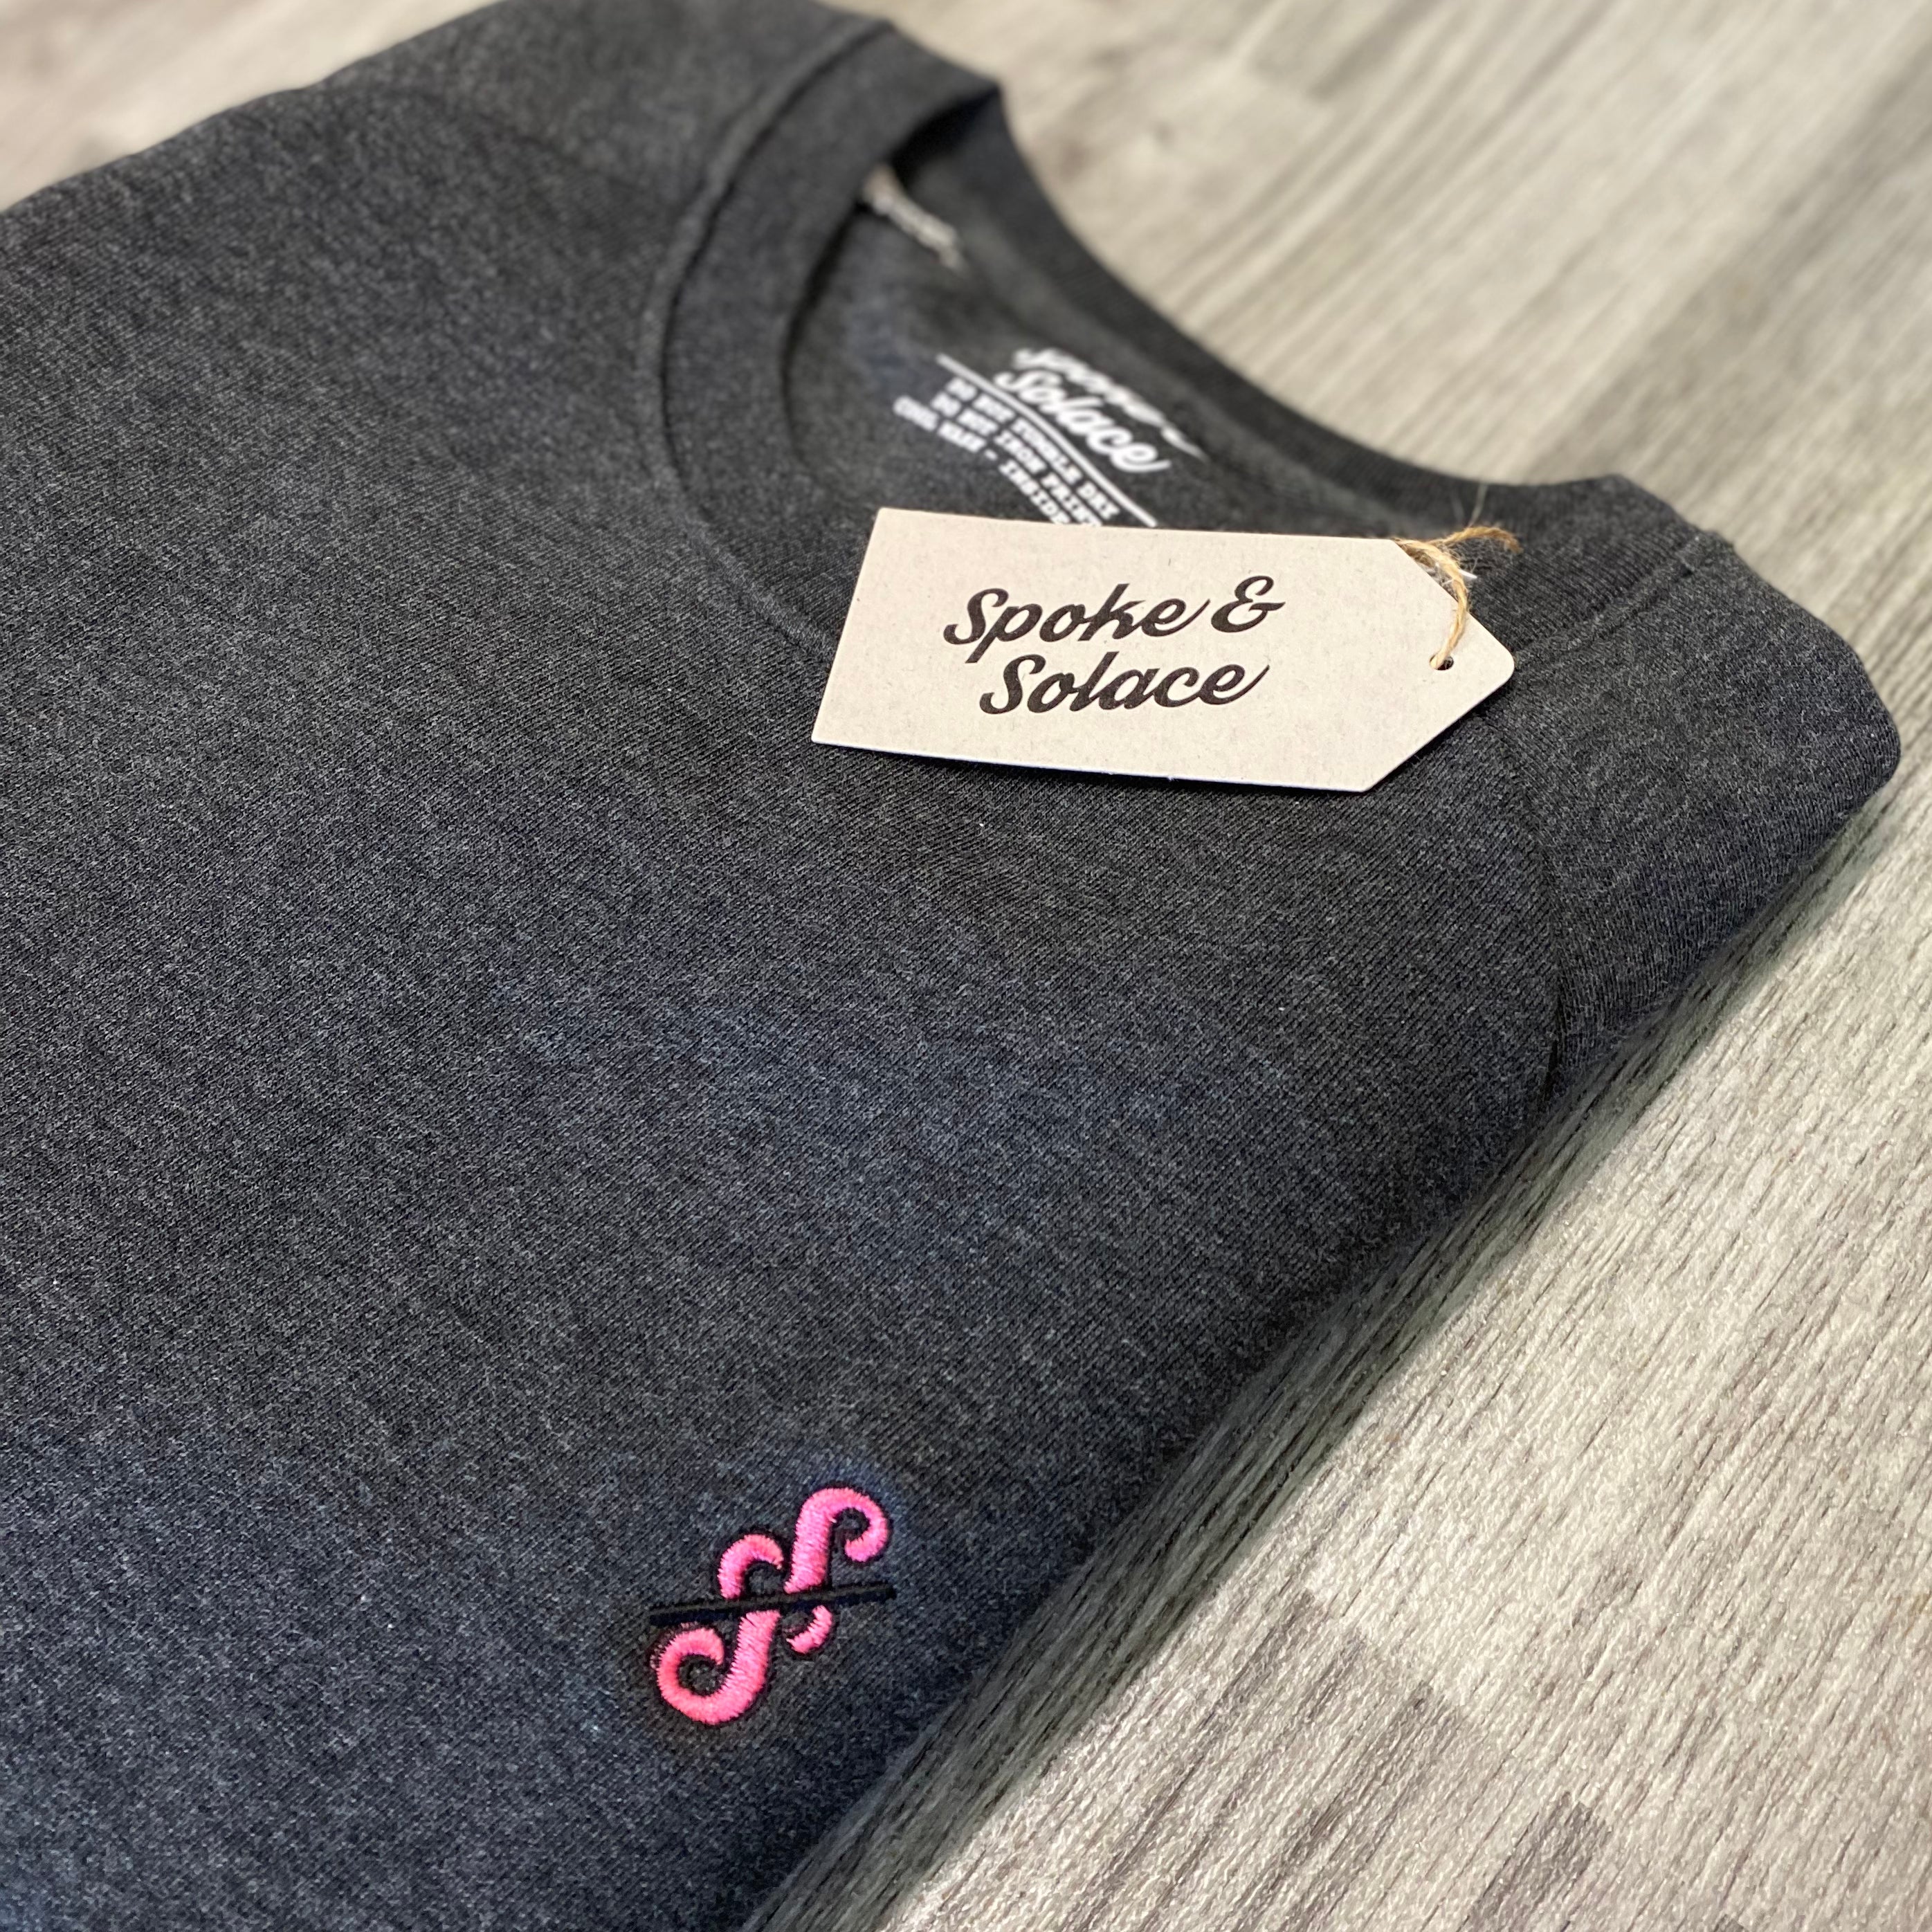 Spoke & Solace Embroidered GIRO Sweatshirt - Spoke & Solace